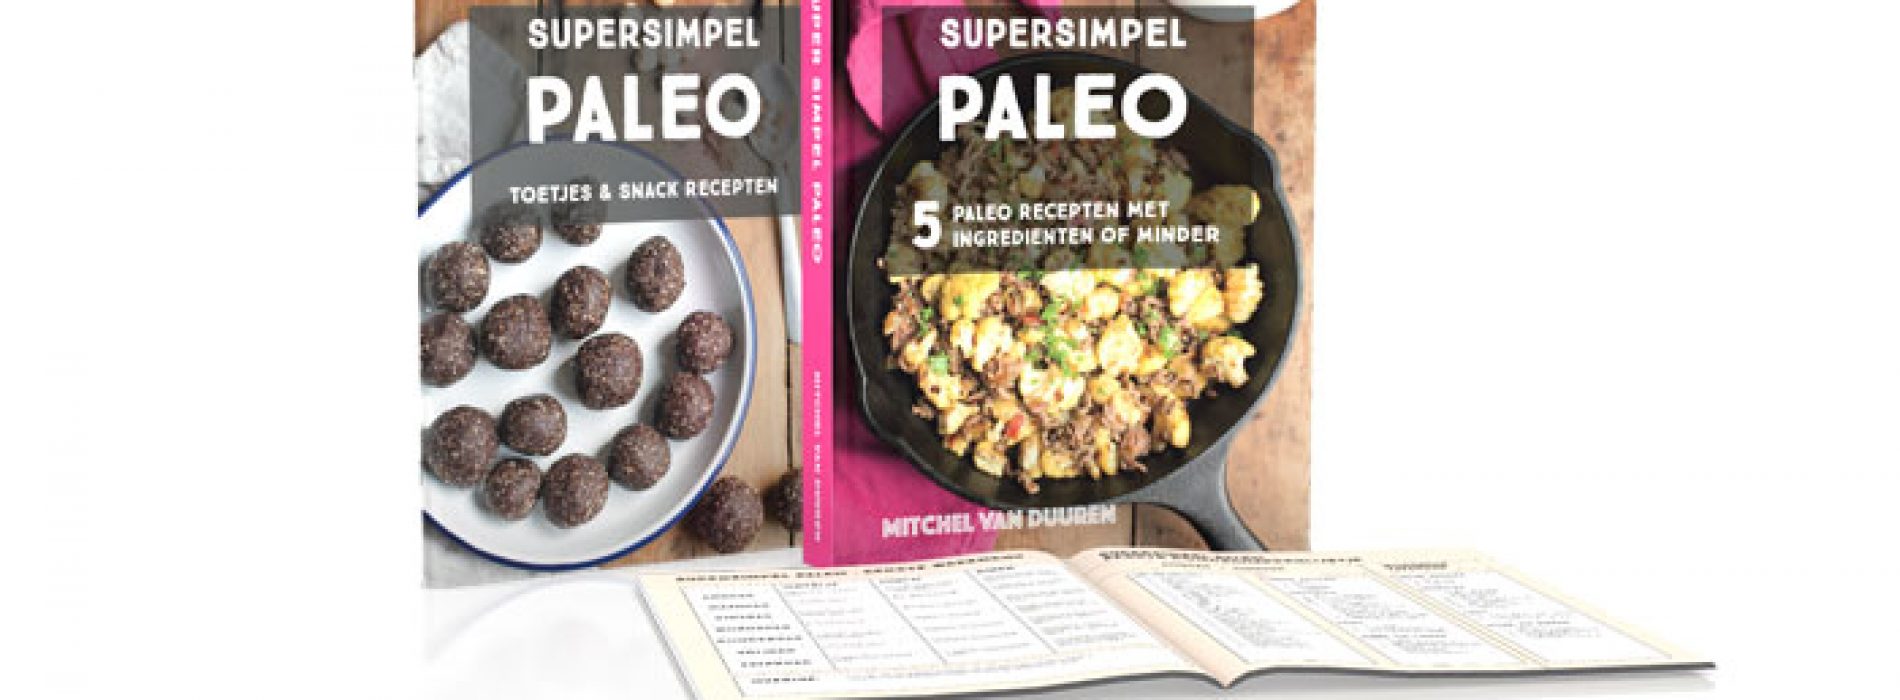 Paleo is hét populaire alternatief voor het hedendaagse hormoonverstorende westerse voedingspatroon